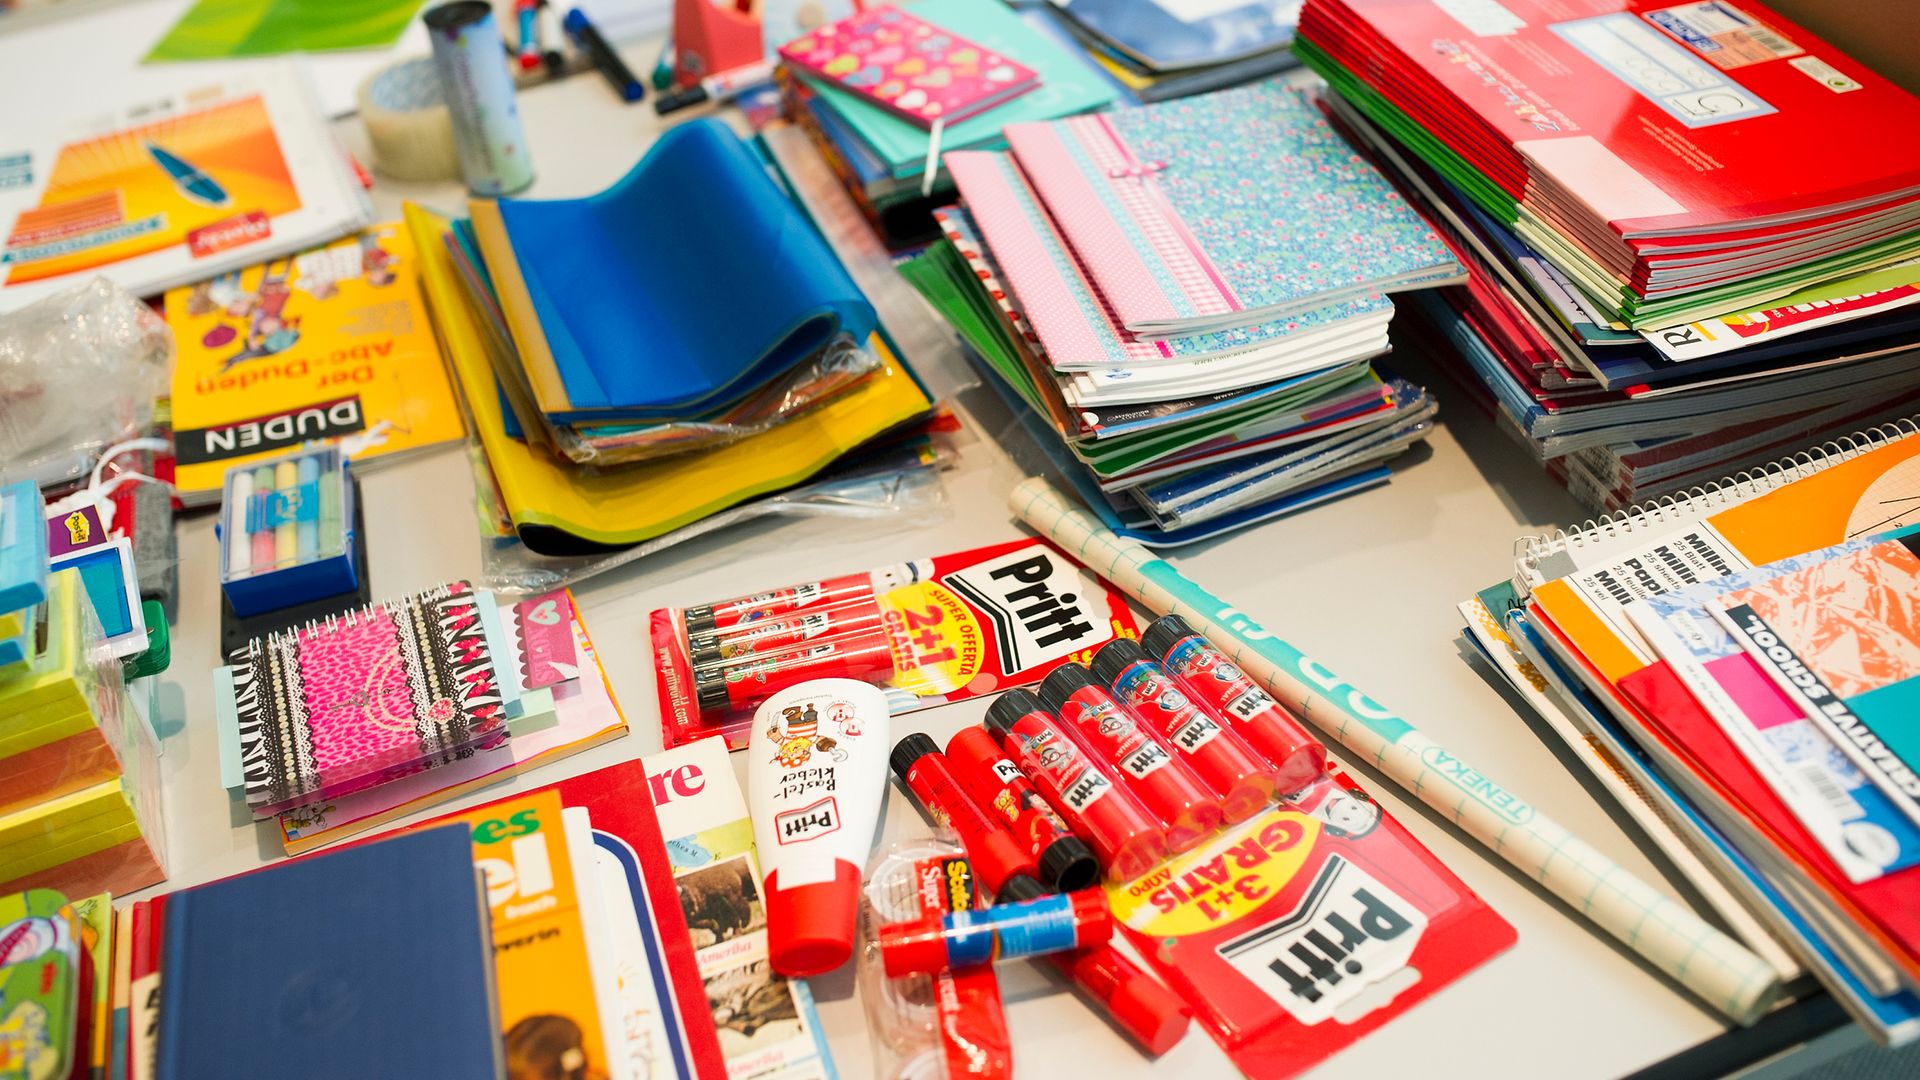 School supplies collected for children at Henkel sites in Germany 